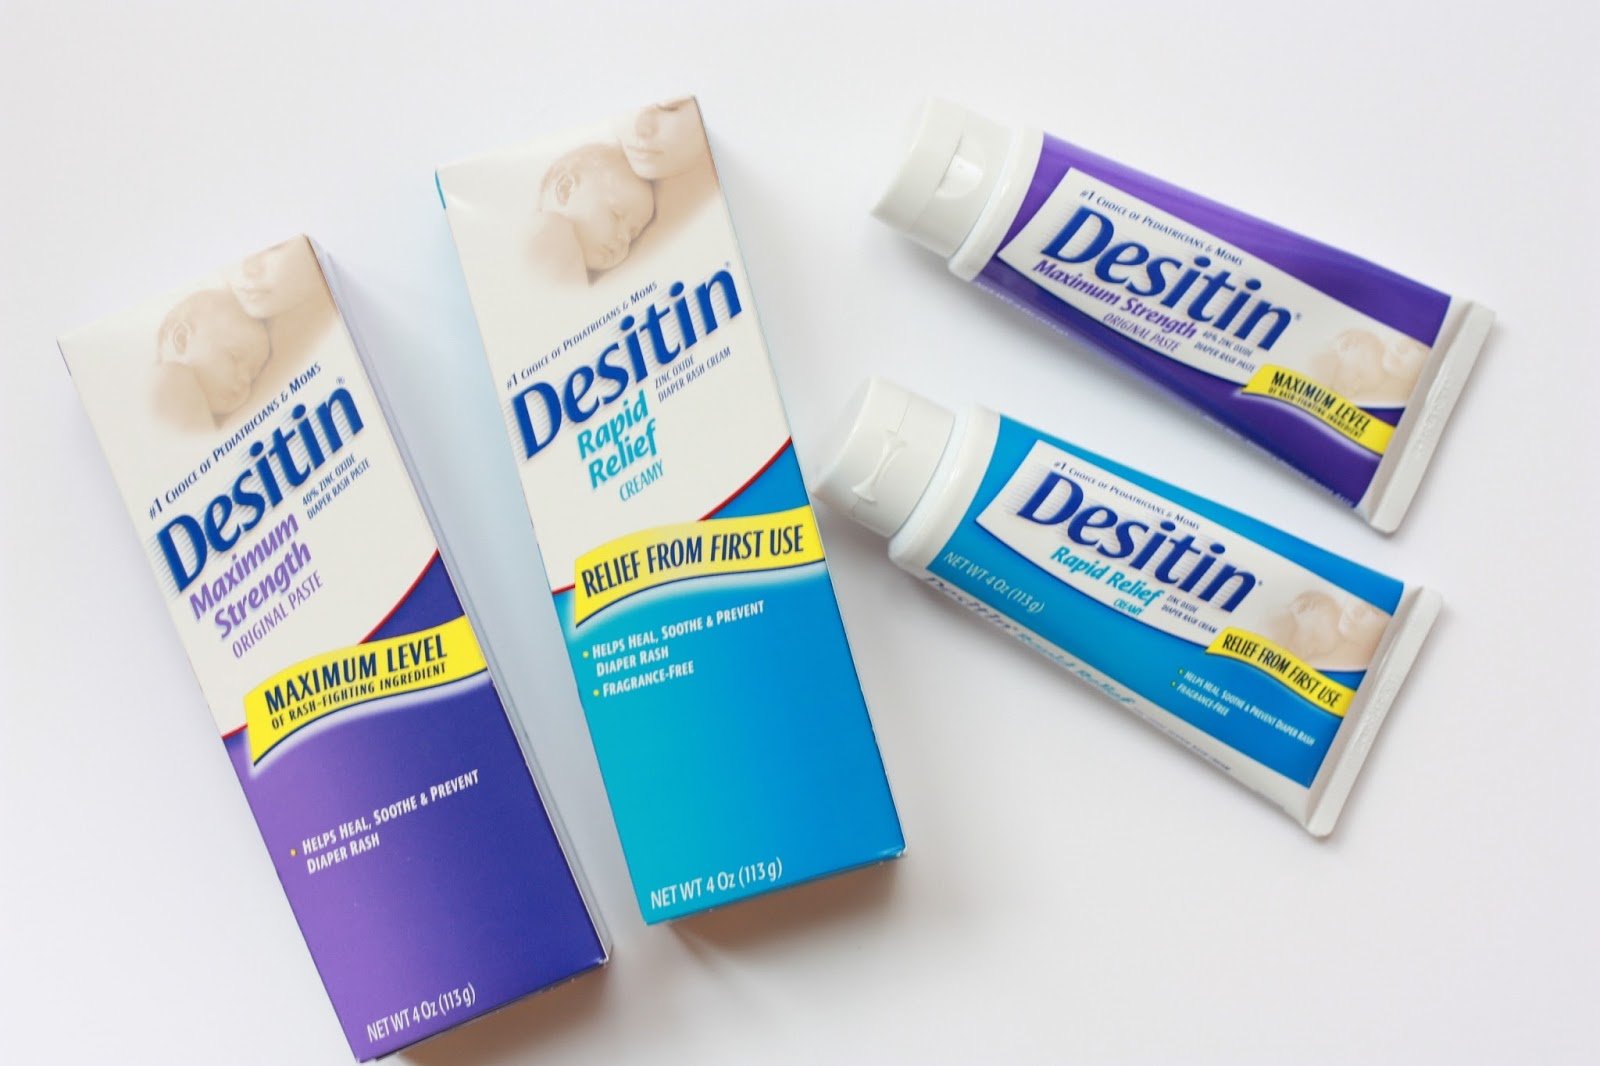 Meet the Sullivans: Change for the Better with DESITIN Cream